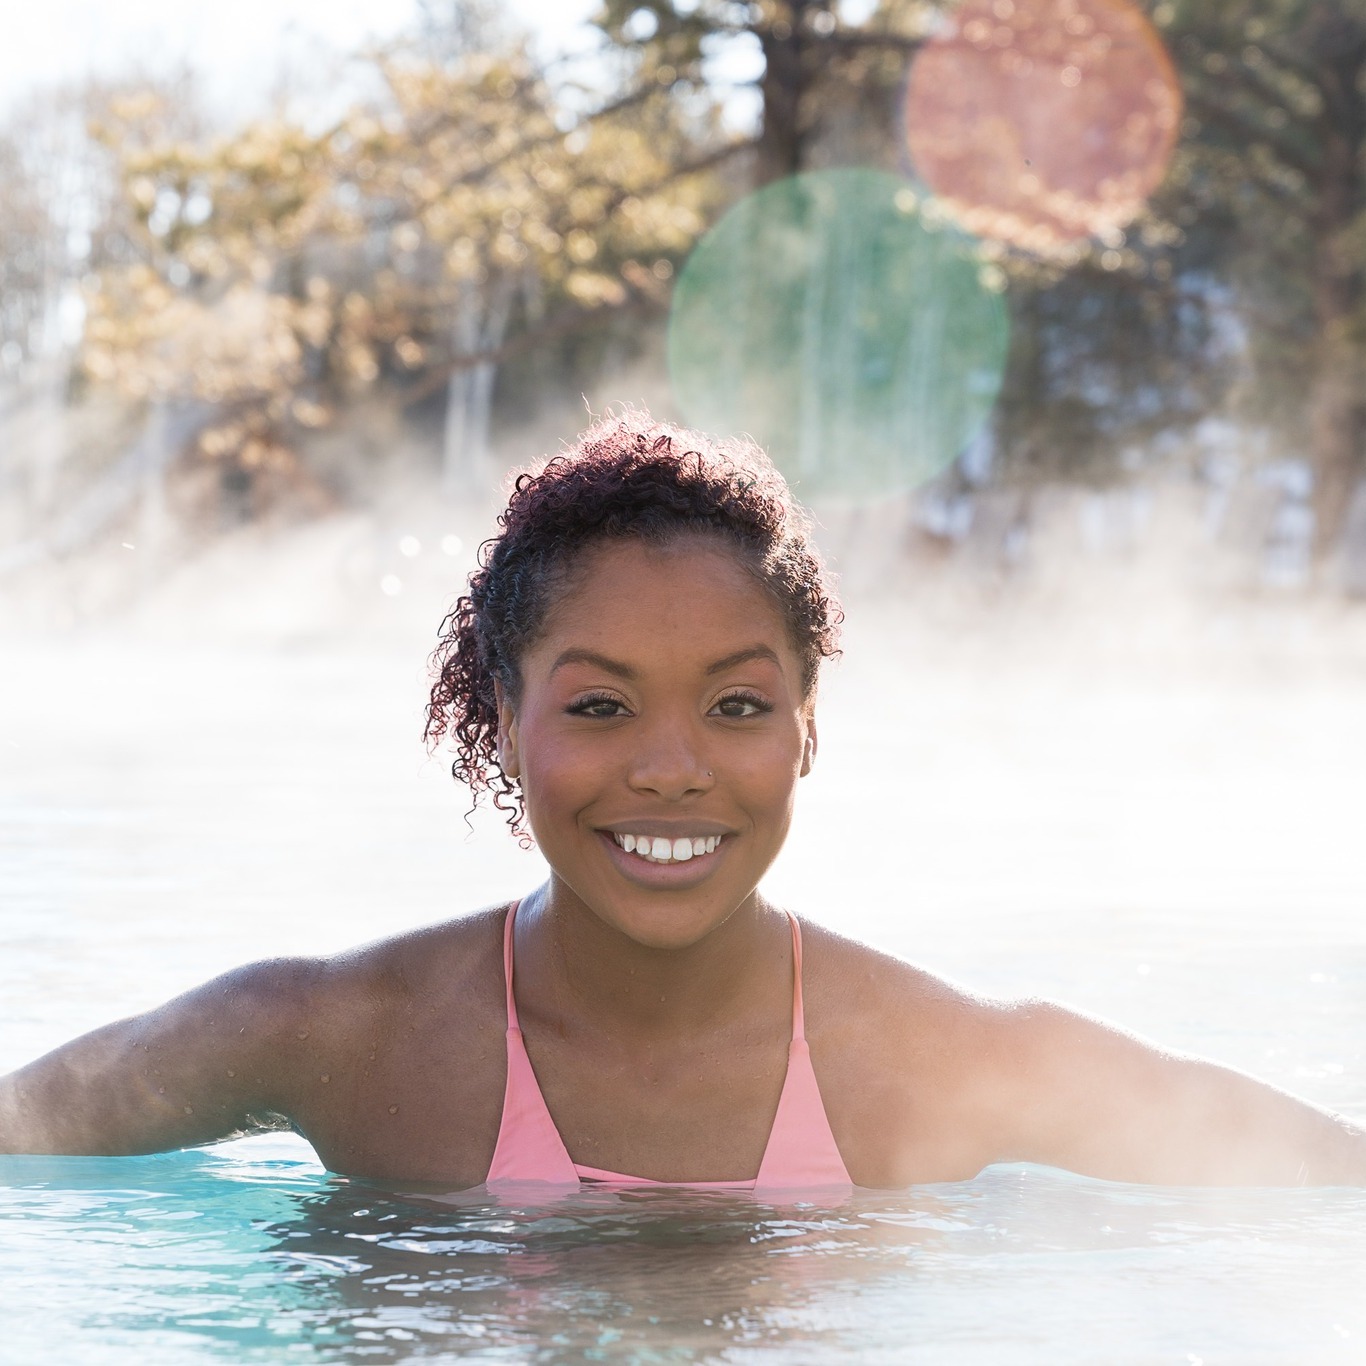 Adult Only Hot Springs in Colorado Mount Princeton Hot Springs Resort Nathrop, Colorado